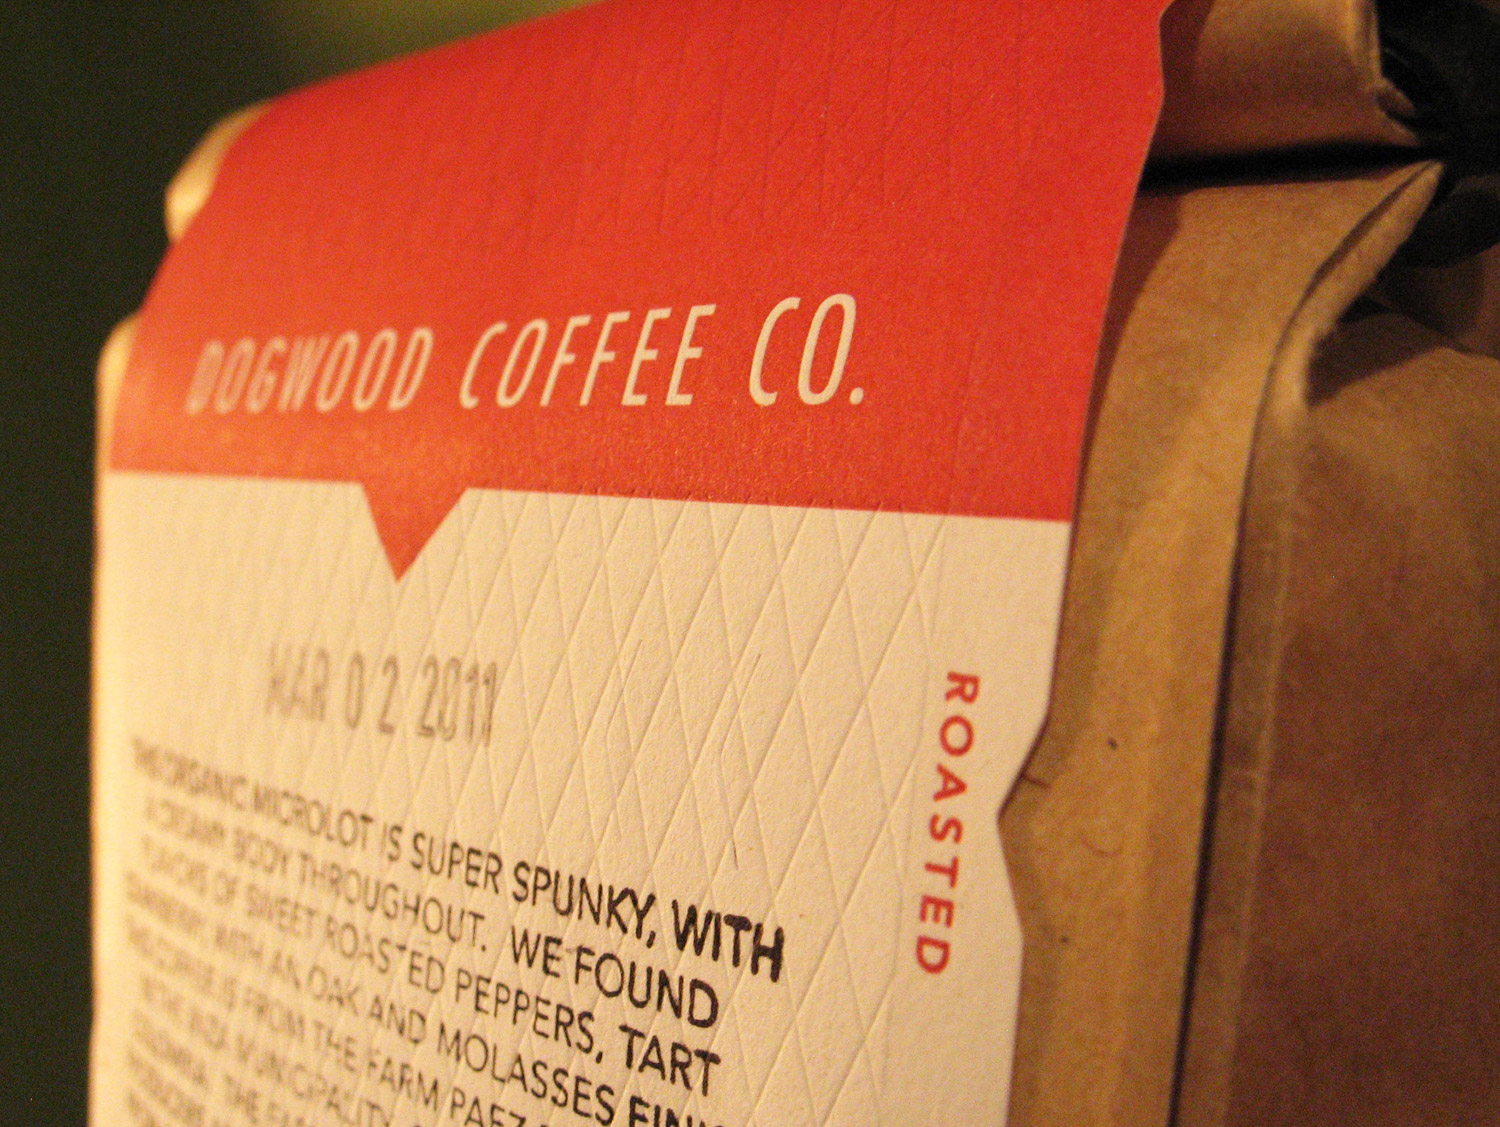 Dogwood-Coffee-Co-11-Packaging-05.jpg